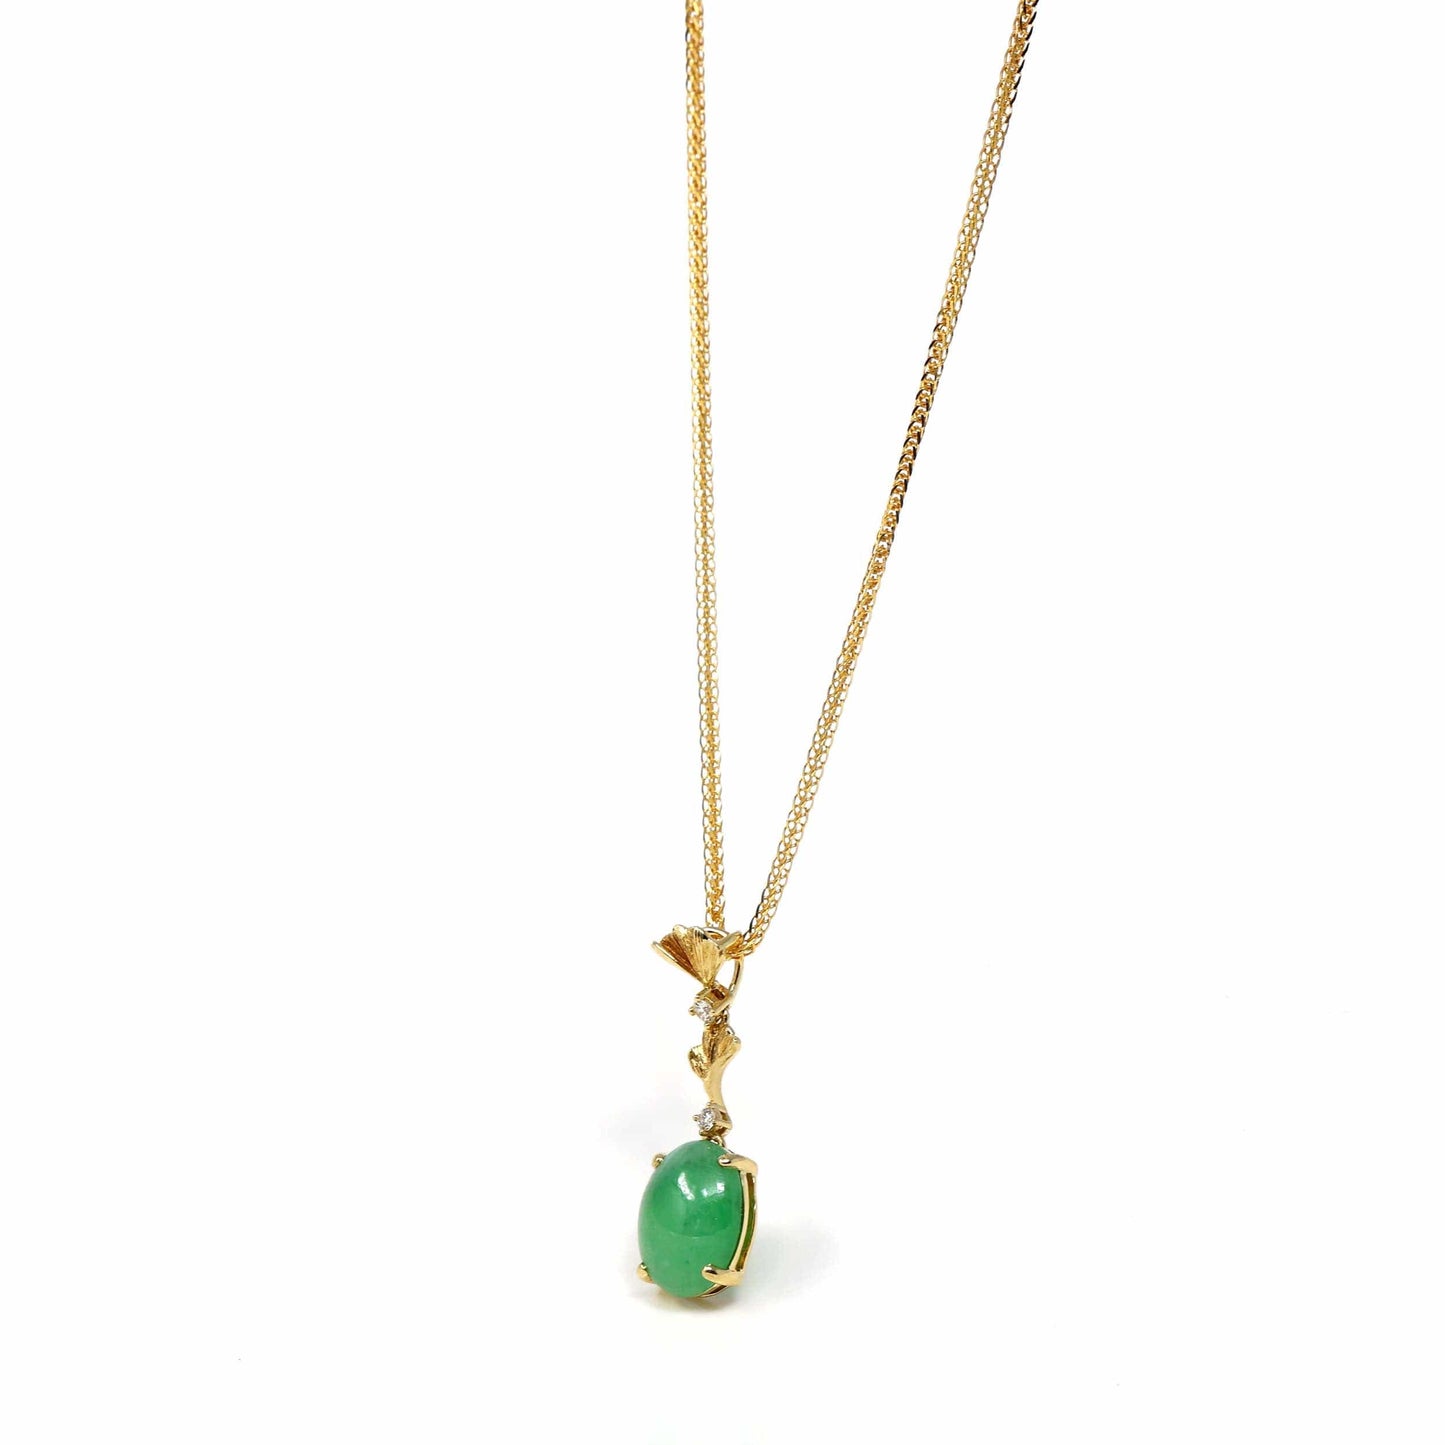 RealJade Co. Gold Jadeite Necklace Copy of 18k Yellow Gold Jadeite Jade Apricot Leaf Pendant Necklace with Diamond